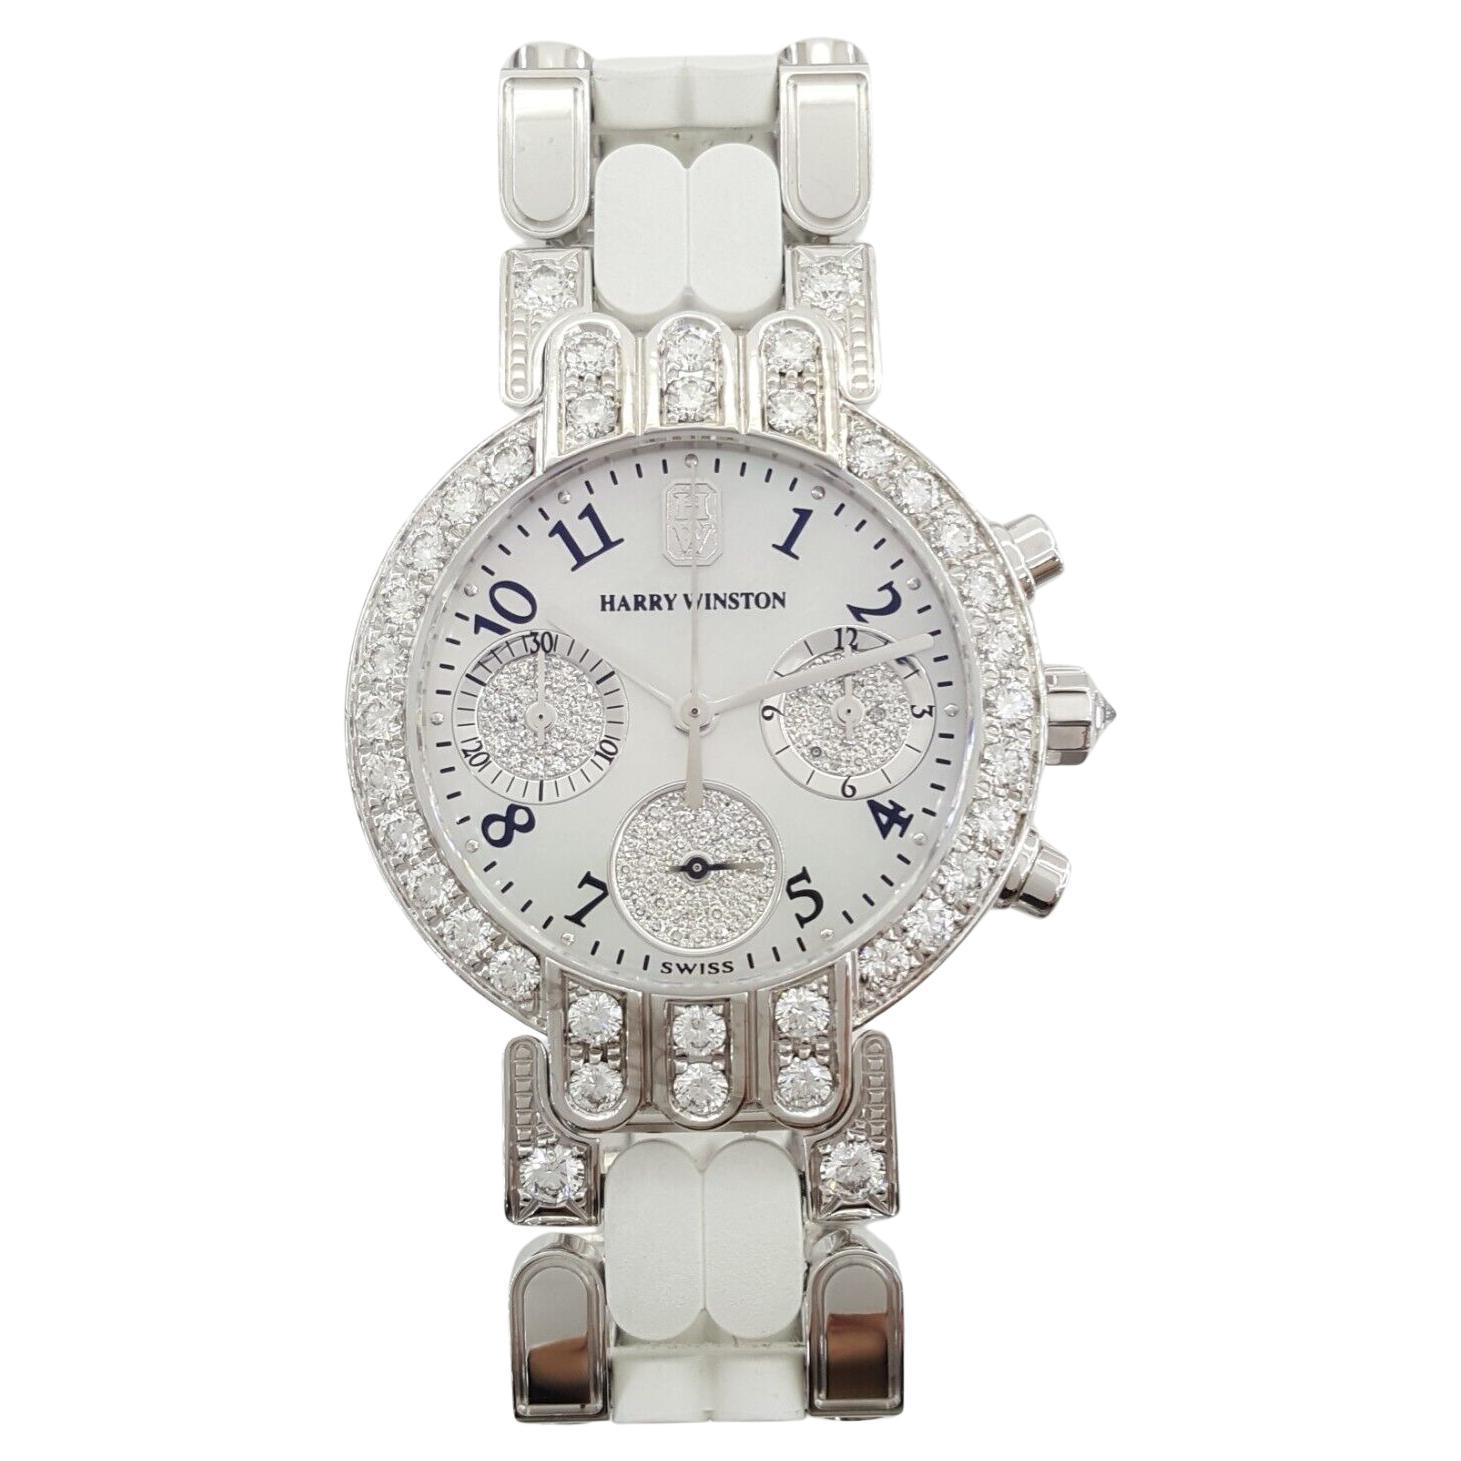  Harry Winston Premier Chronograph Automatic Watch 18k White Gold Diamonds For Sale